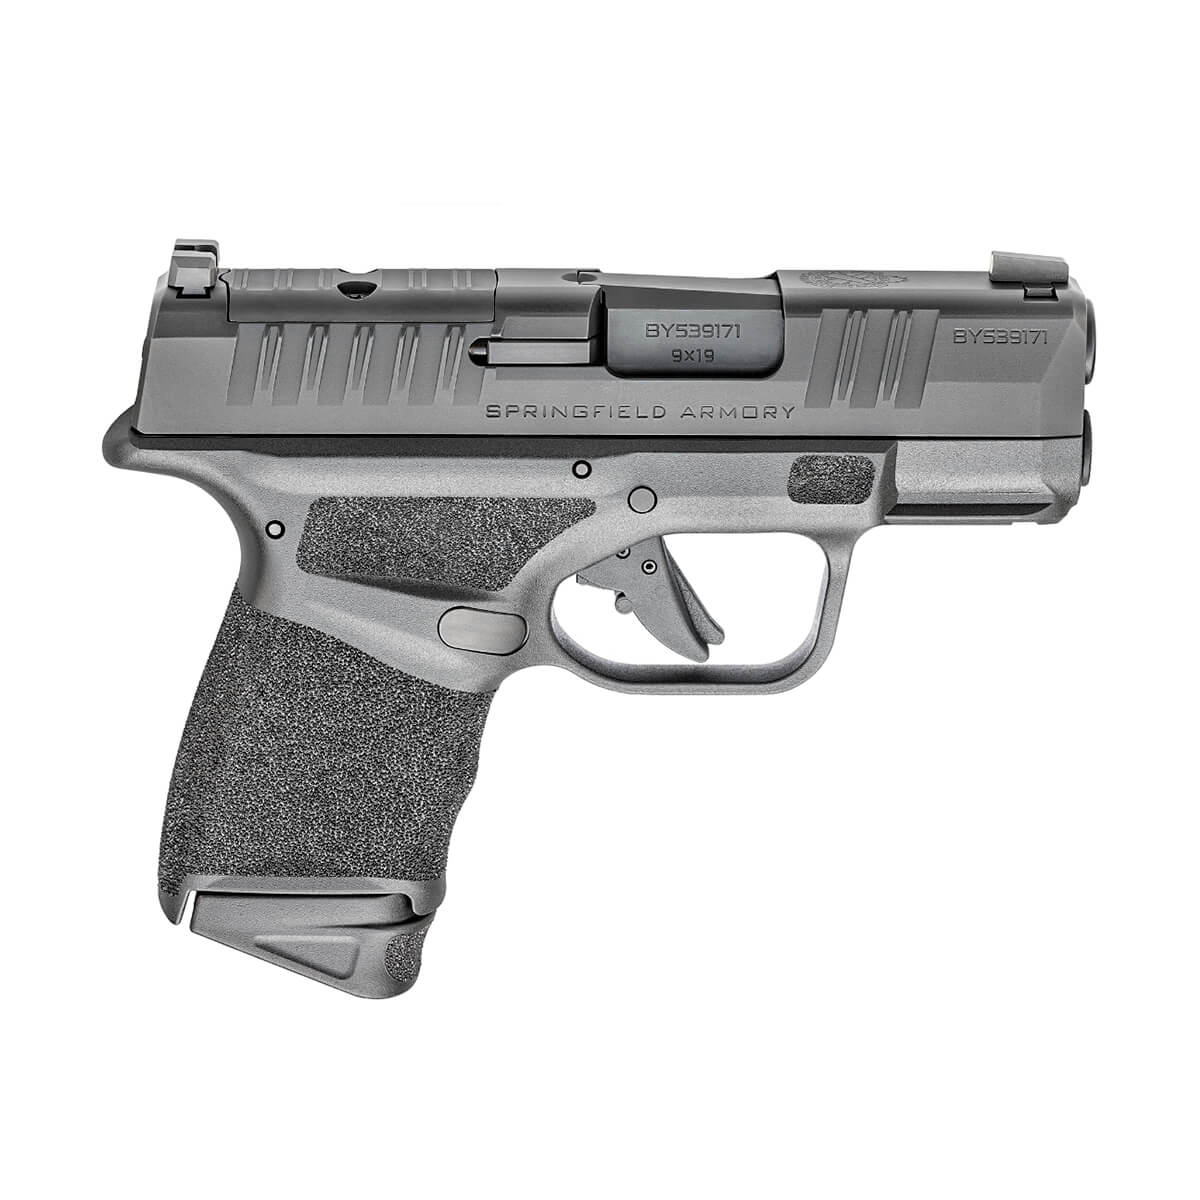 Pistola Semi-Automática 9mm Springfield HELLCAT 3" MOS Micro-Compact OSP Handgun - MAB AIRSOFT